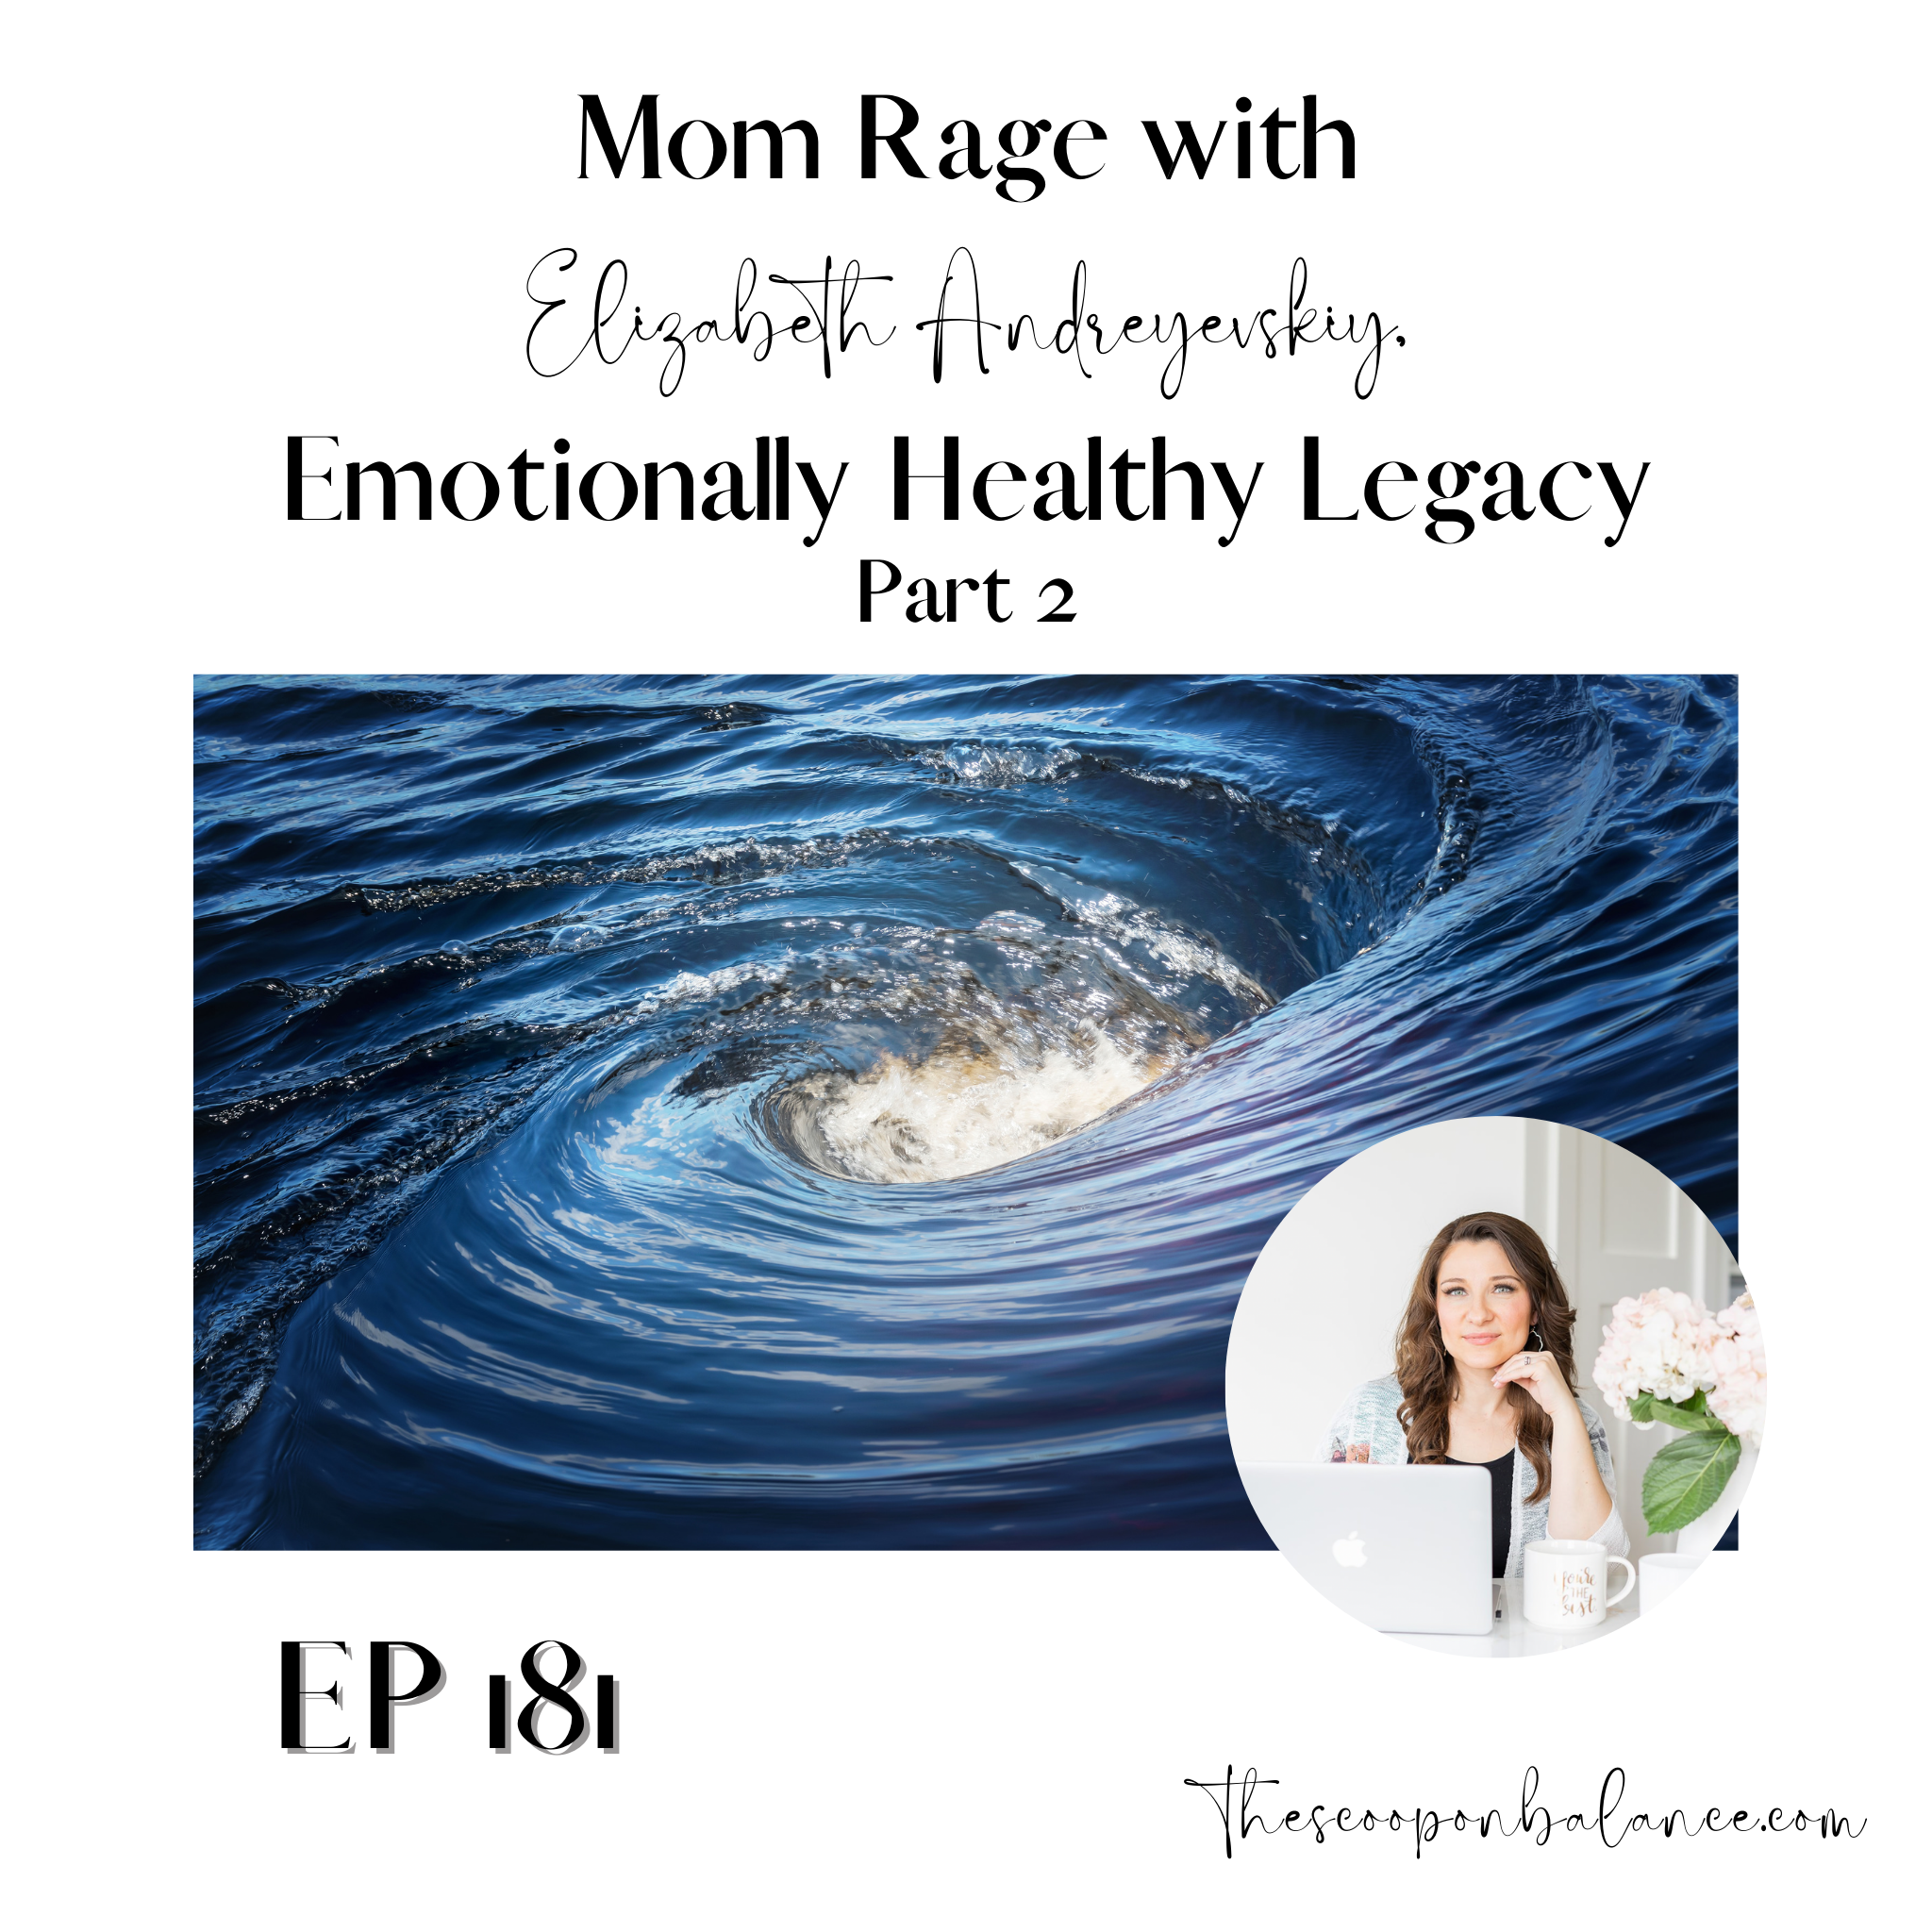 Ep 181: Mom Rage with Elizabeth Andreyevskiy, Part 2